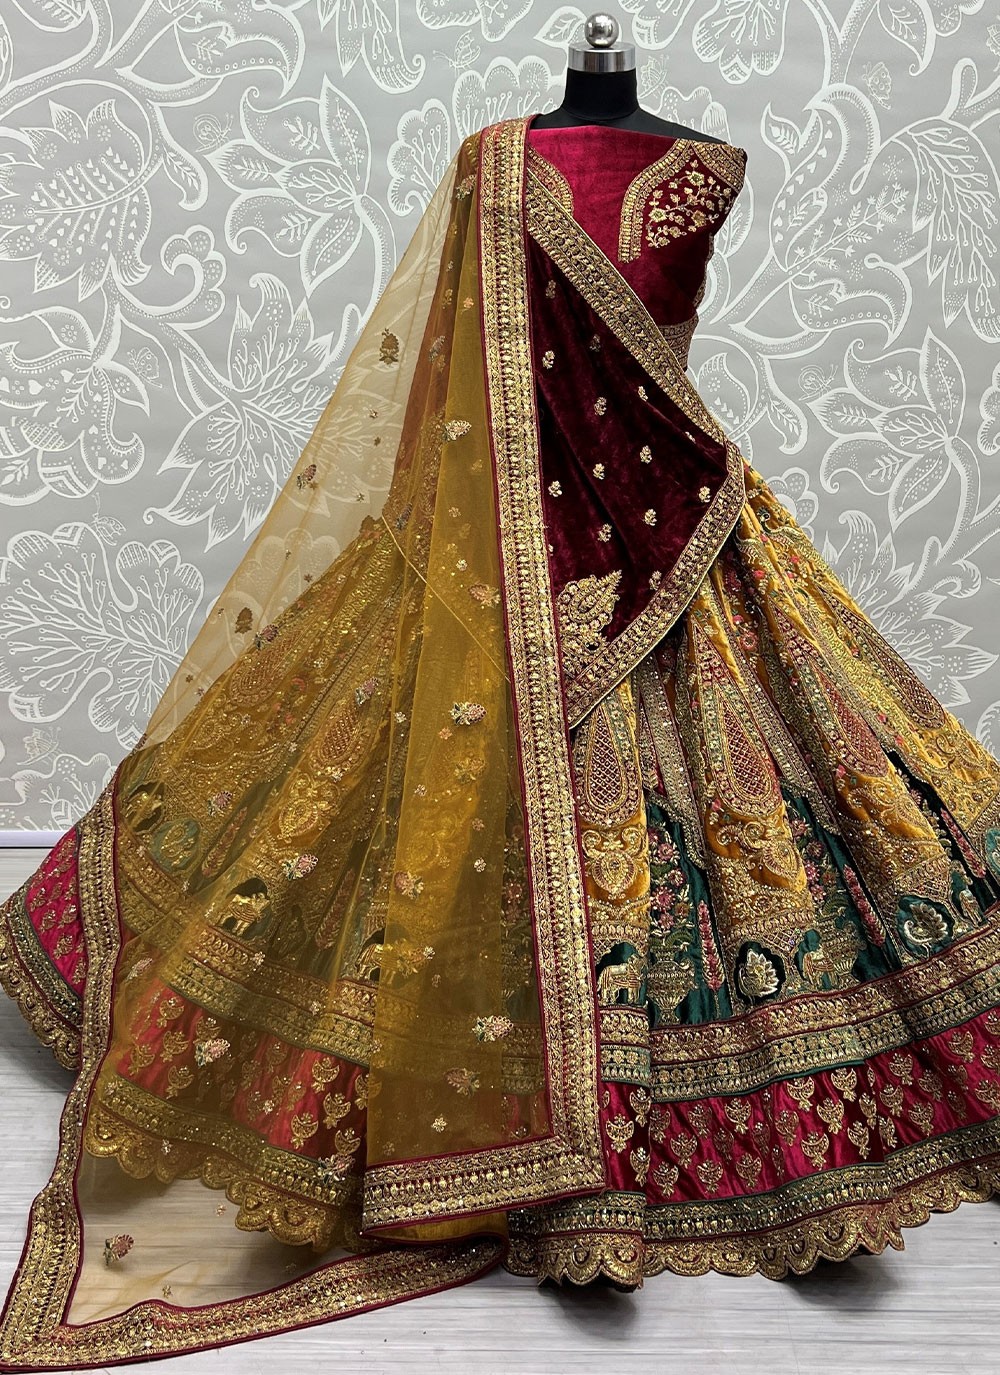 Multi Colour Designer Lehenga Choli in Art Silk Fabric.